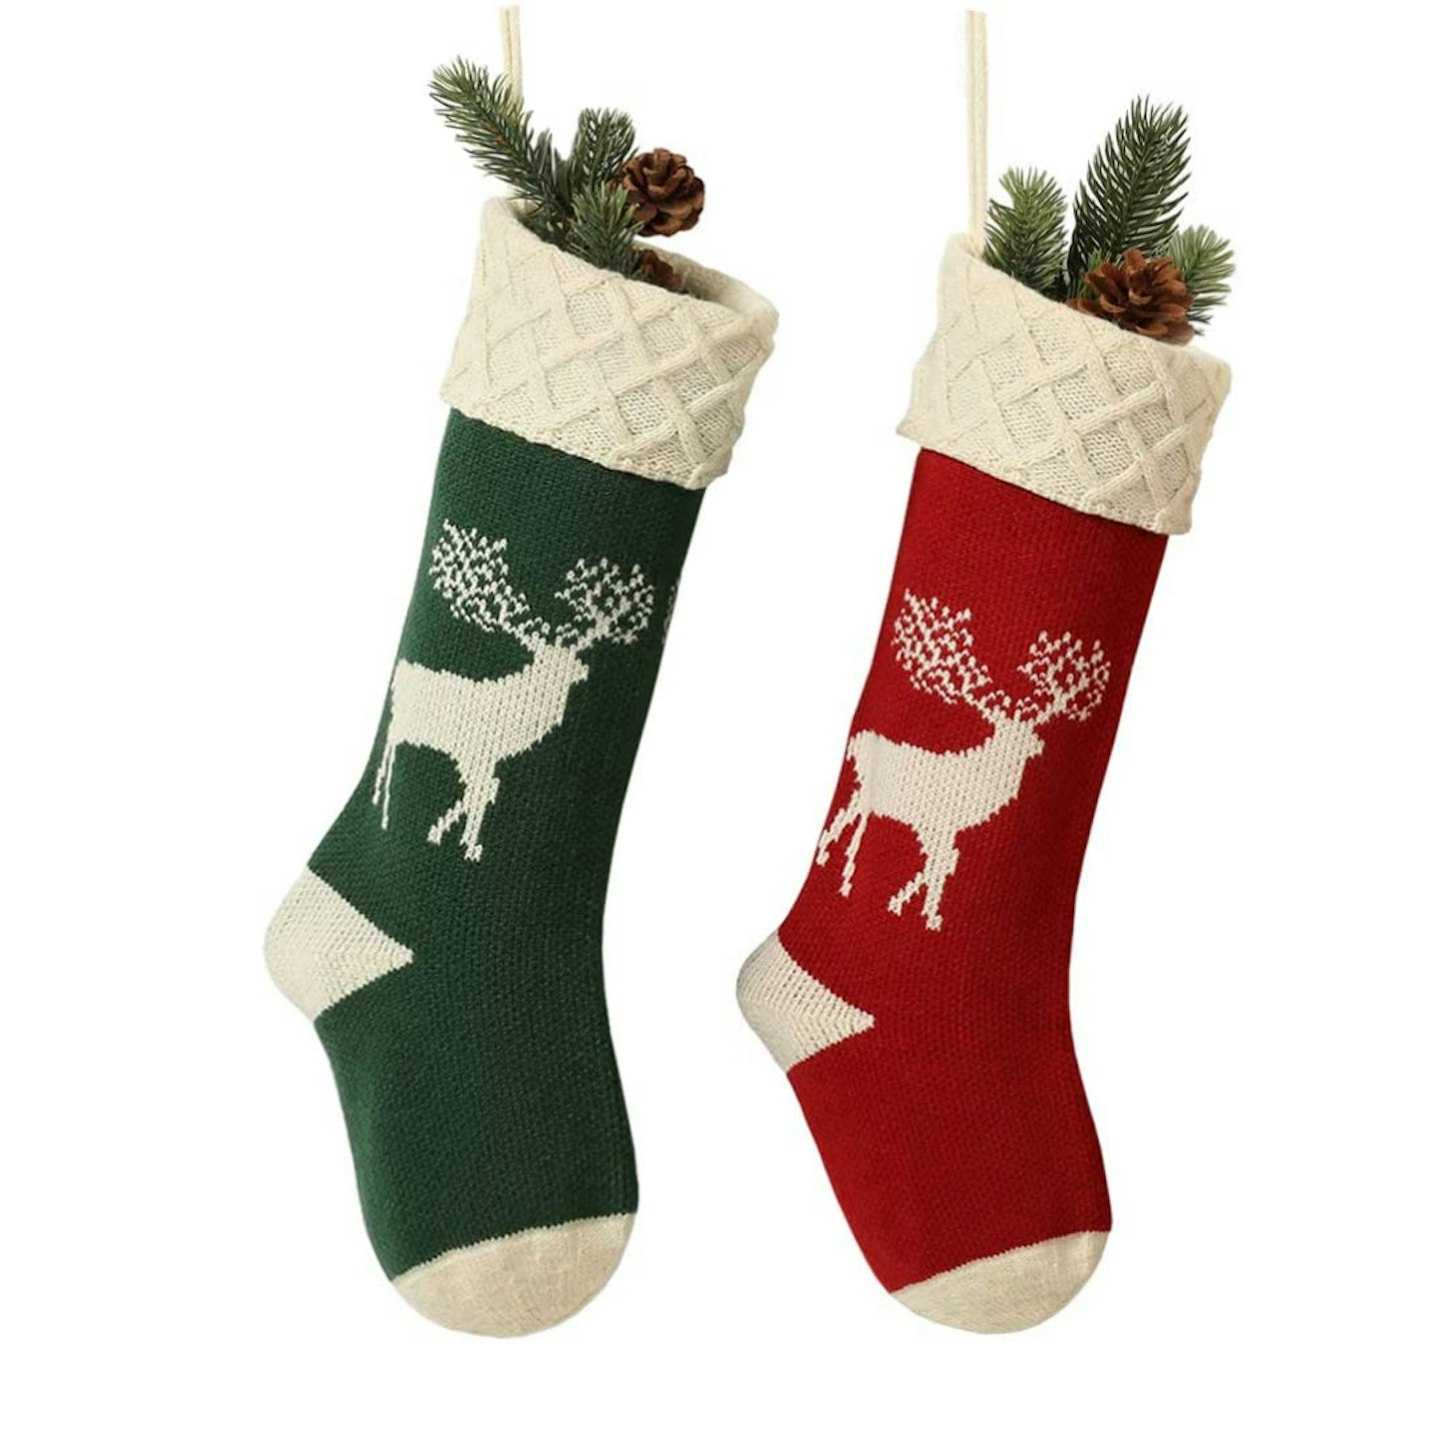 Knitted Reindeer Pattern Xmas Stockings